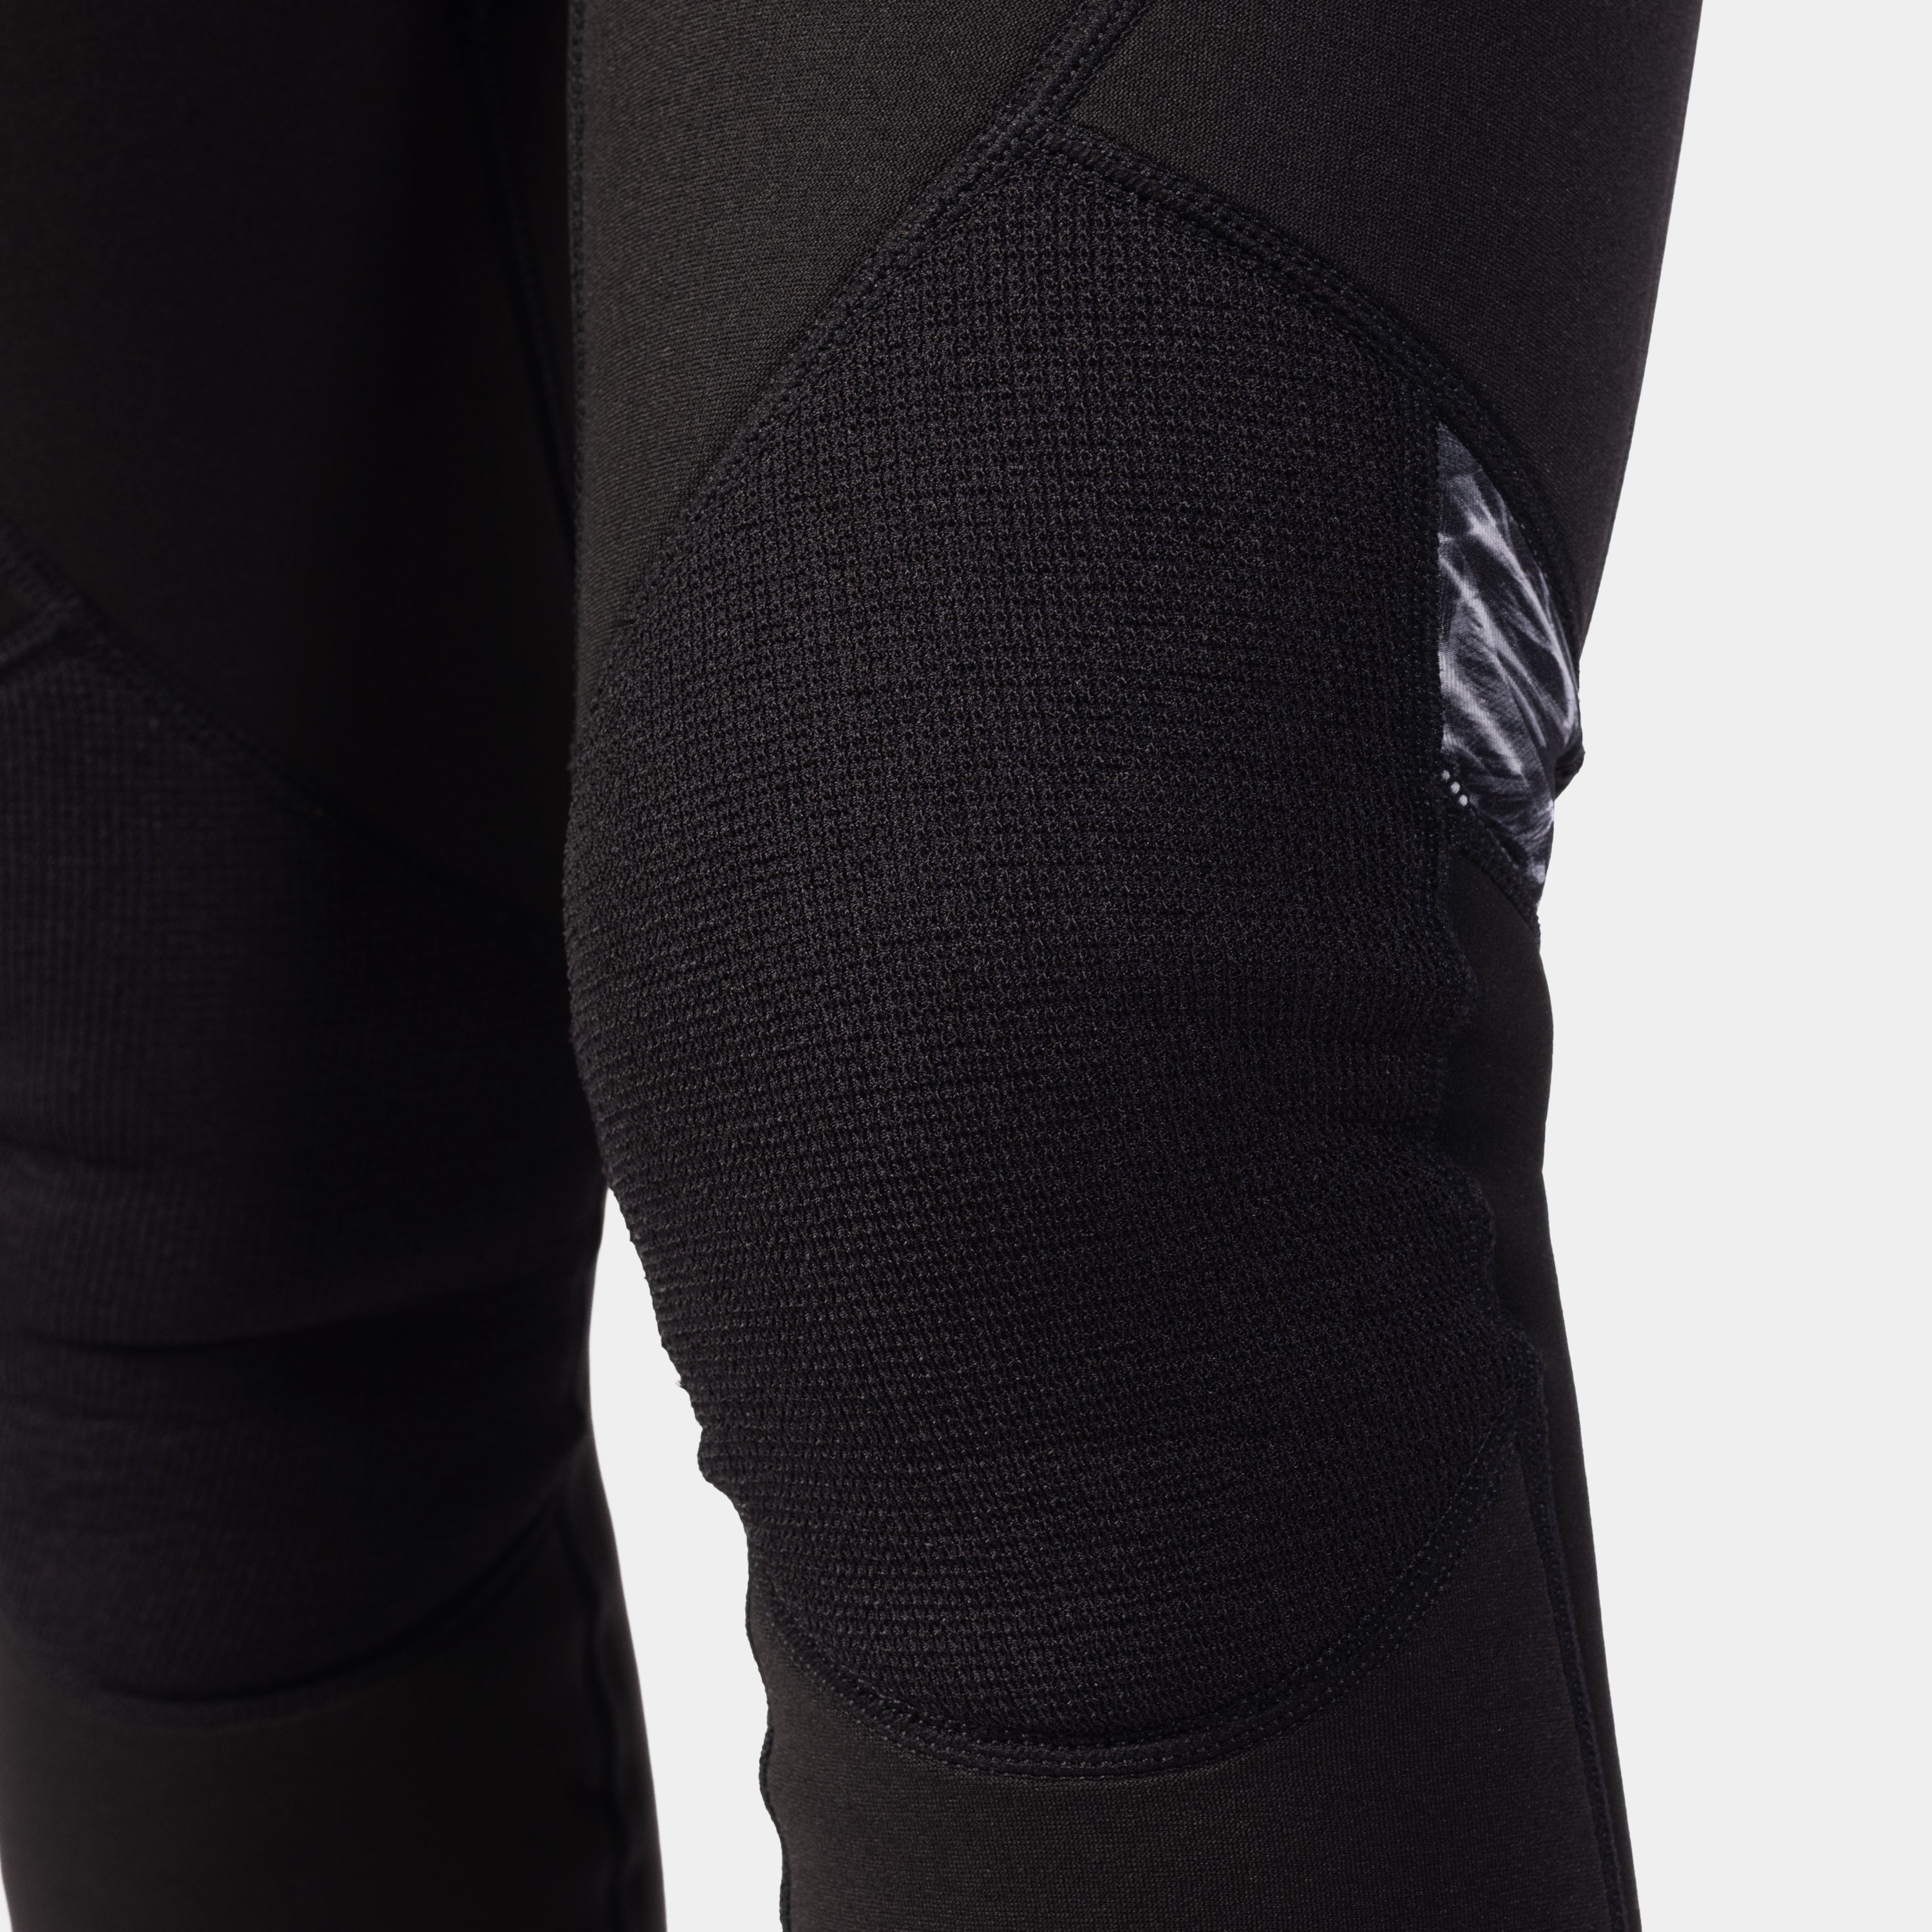 Gul Response 3/2mm Women's LongJane Wetsuit | Protective Knee patch